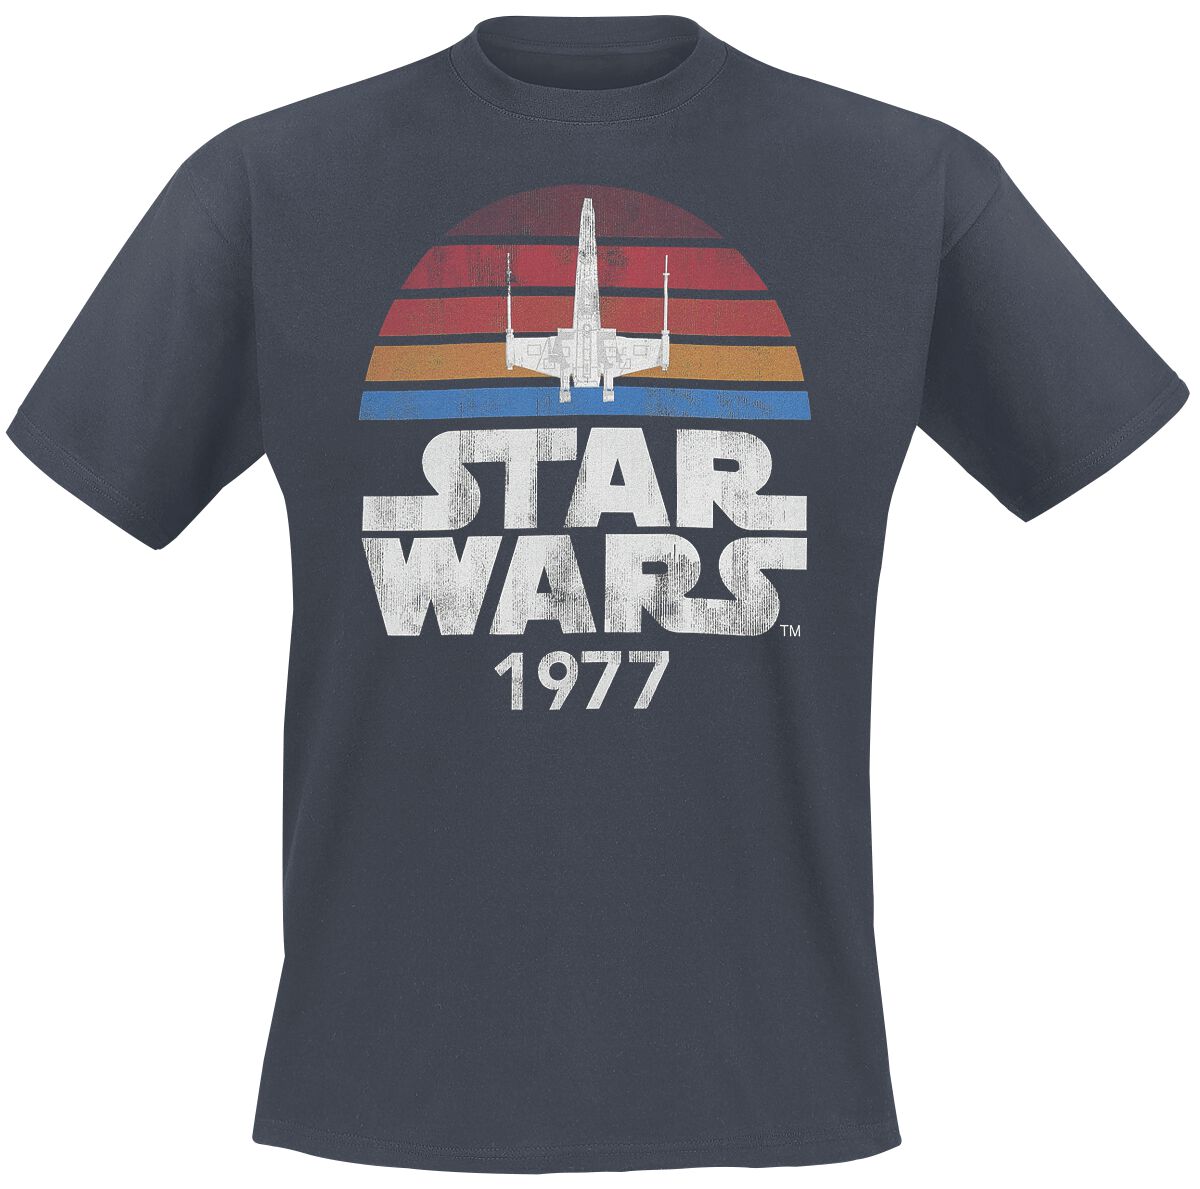 Star Wars Since 1977 T-Shirt anthrazit in M